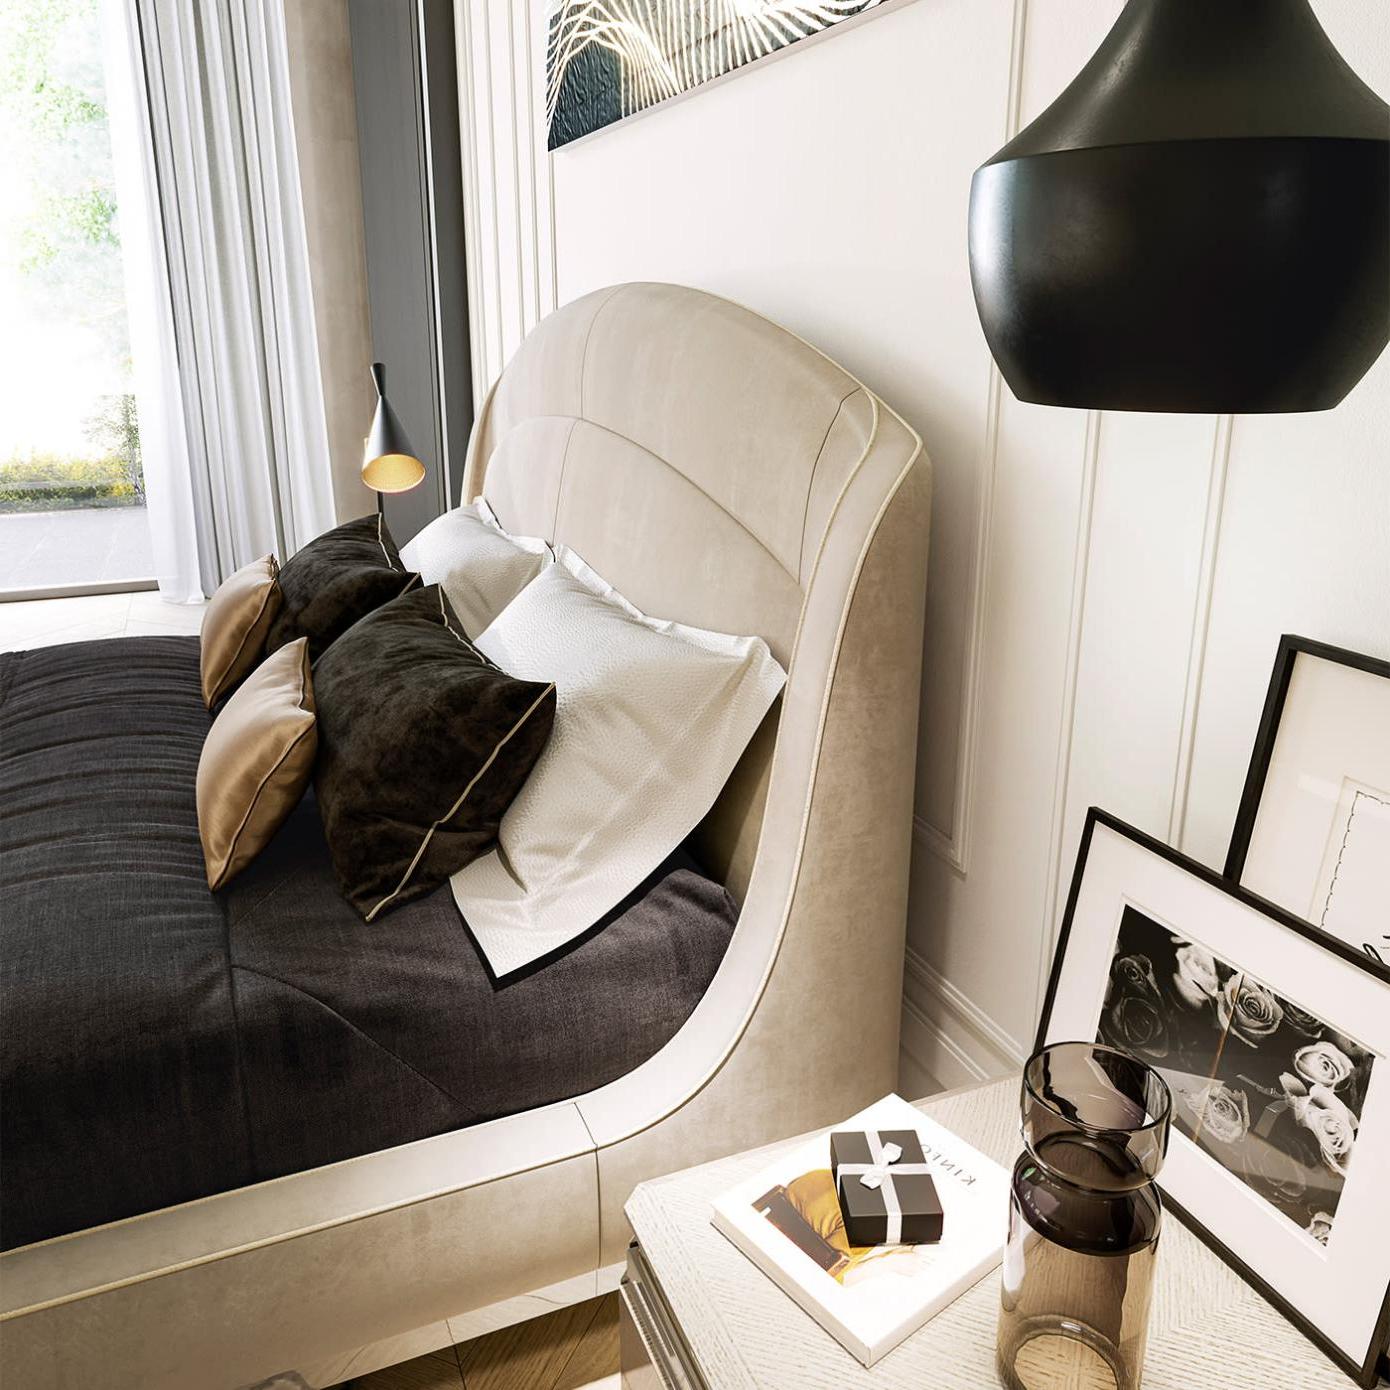 Contemporary Beige Luxury Bed